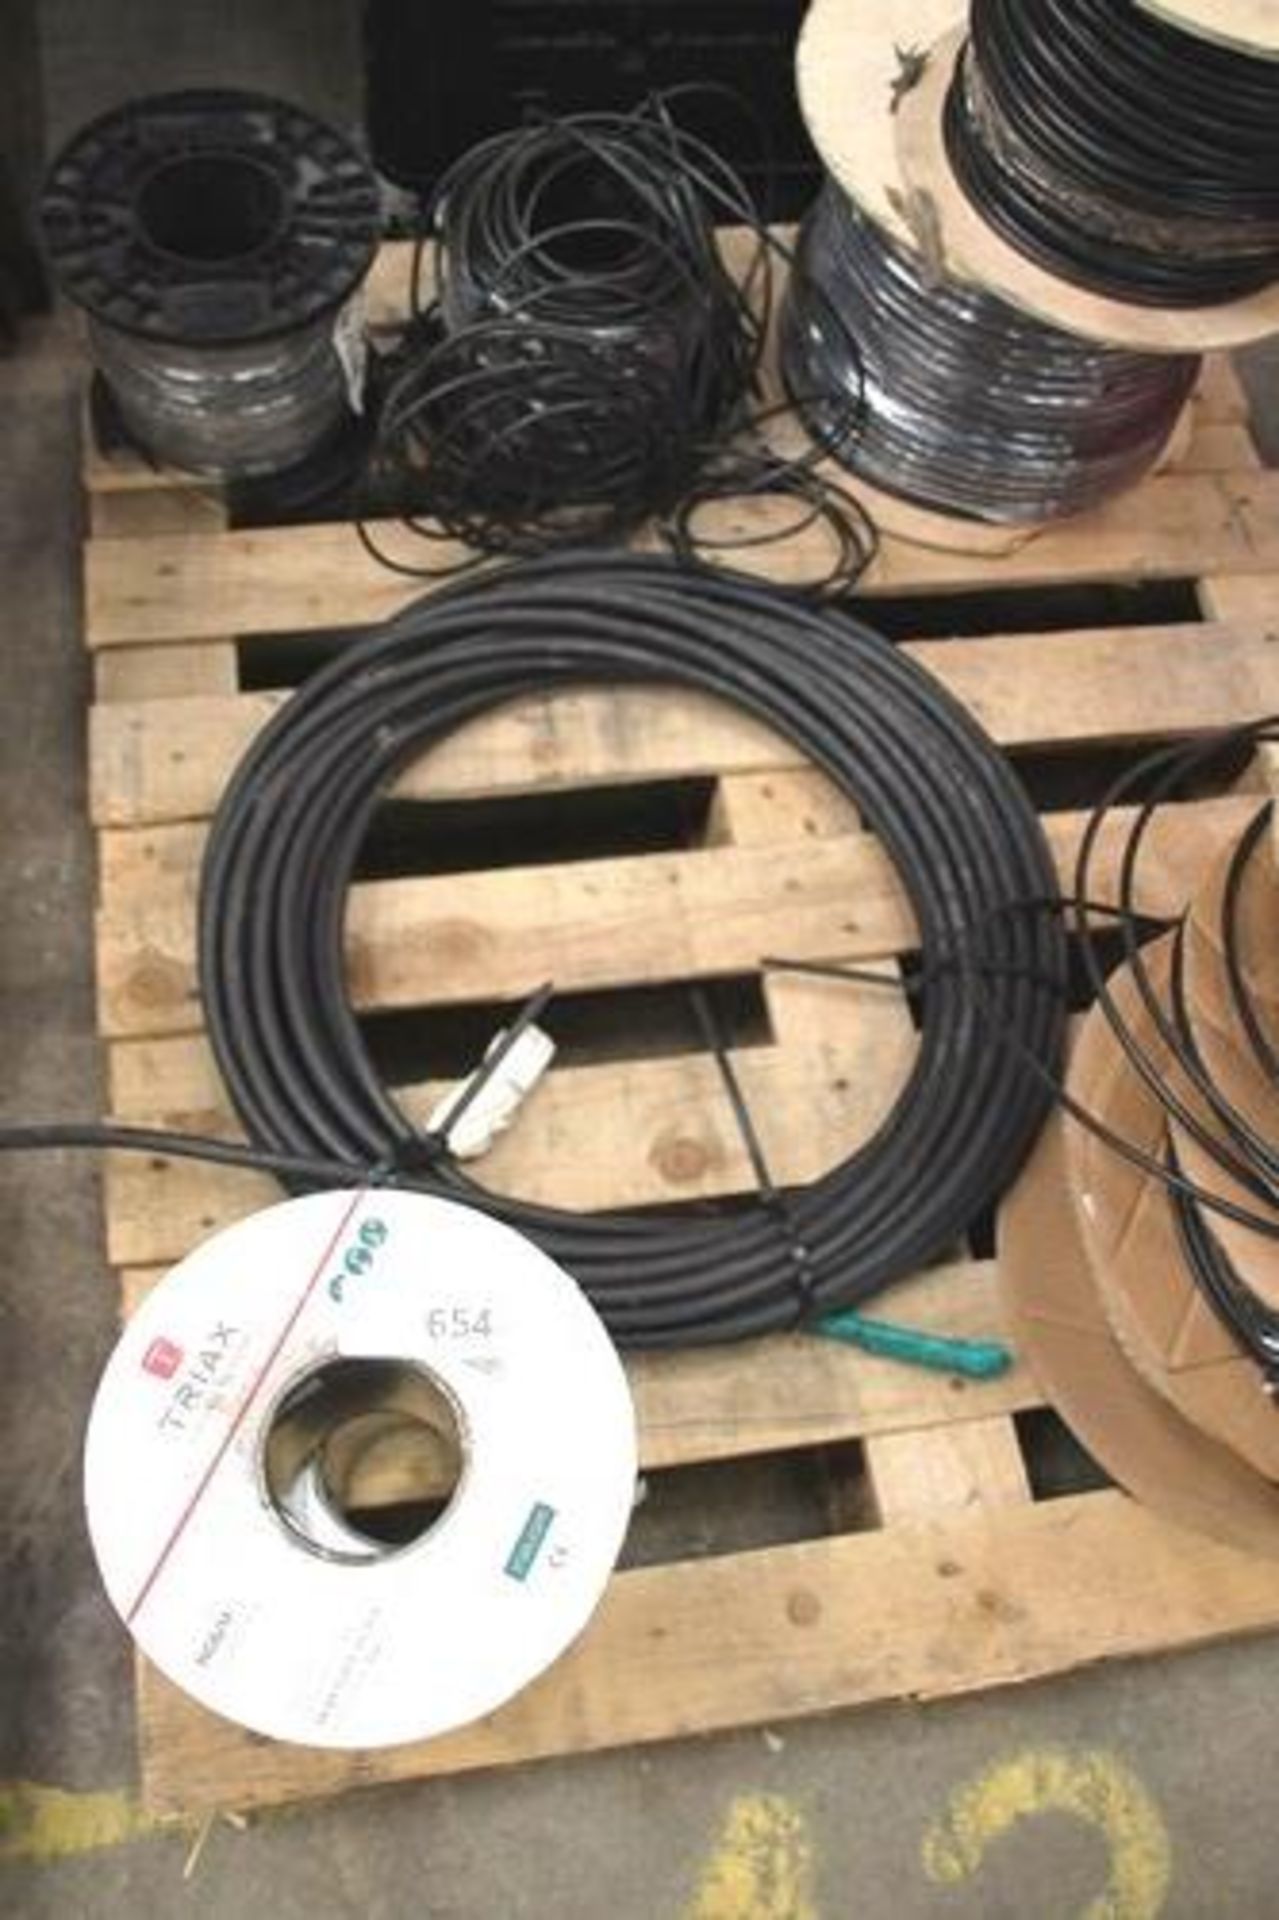 A pallet of cable including 2 x 100m of Triax black RG6/U, 1 x 100m 3 x 2.5mm2 SWA reel, 1 x 100m